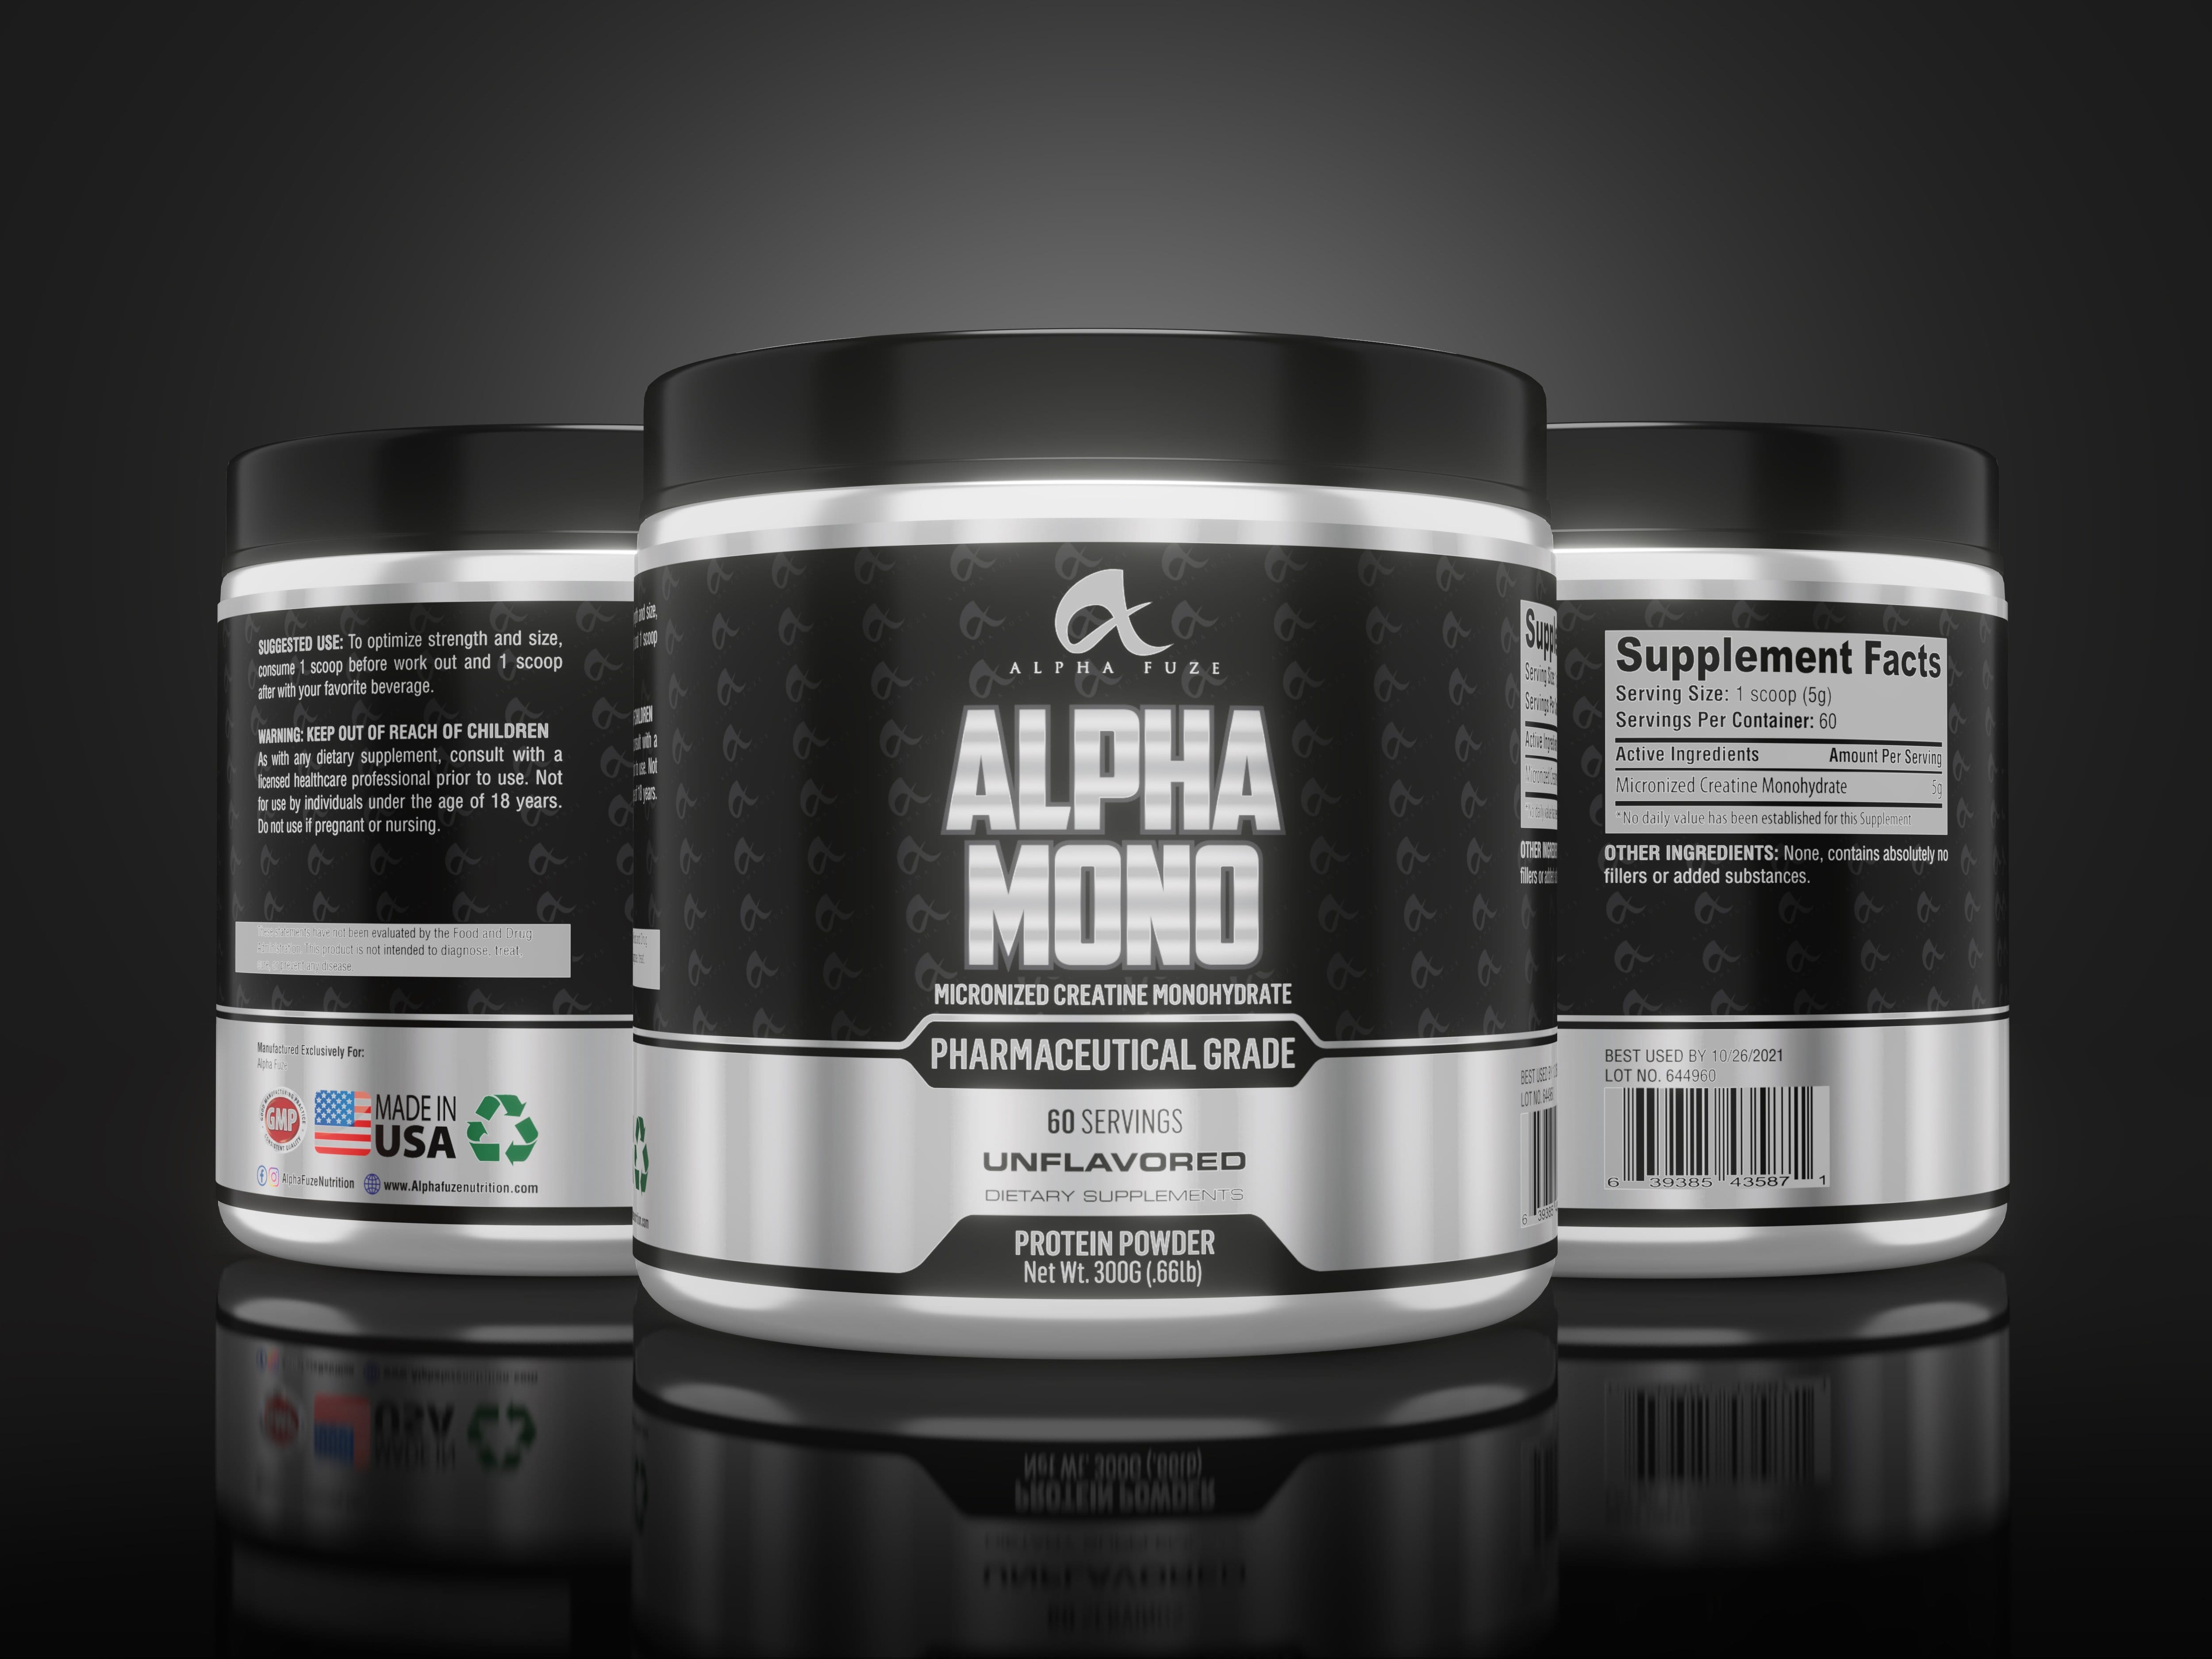 Alpha Fuze Single ALPHA- MONO creatine